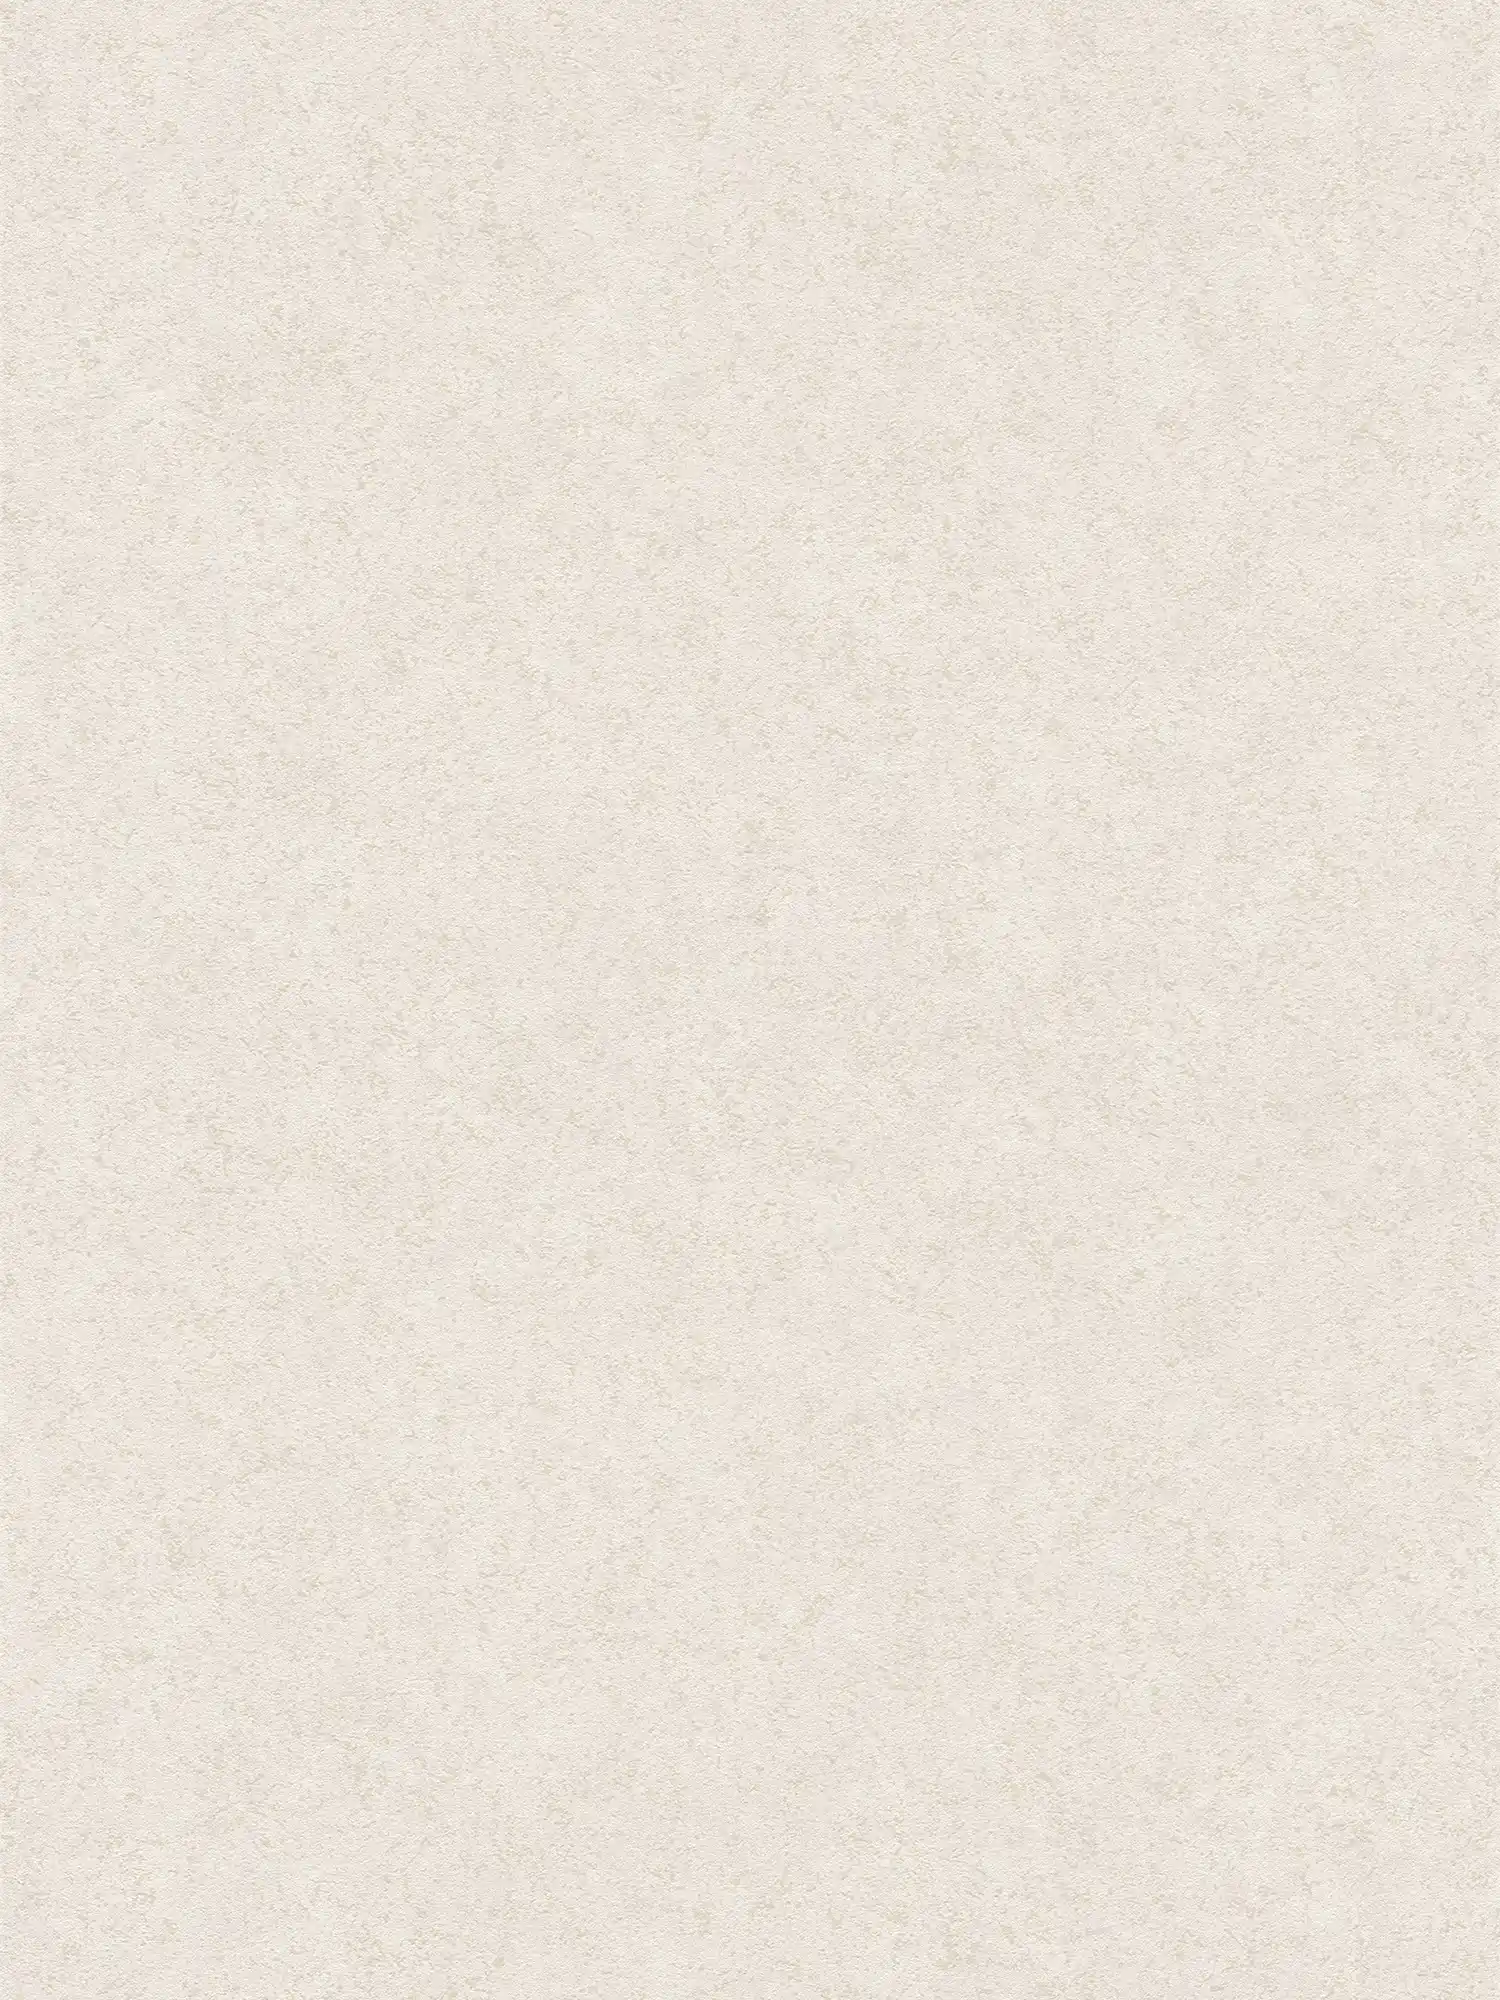 Matt non-woven wallpaper with plaster look - beige, white
